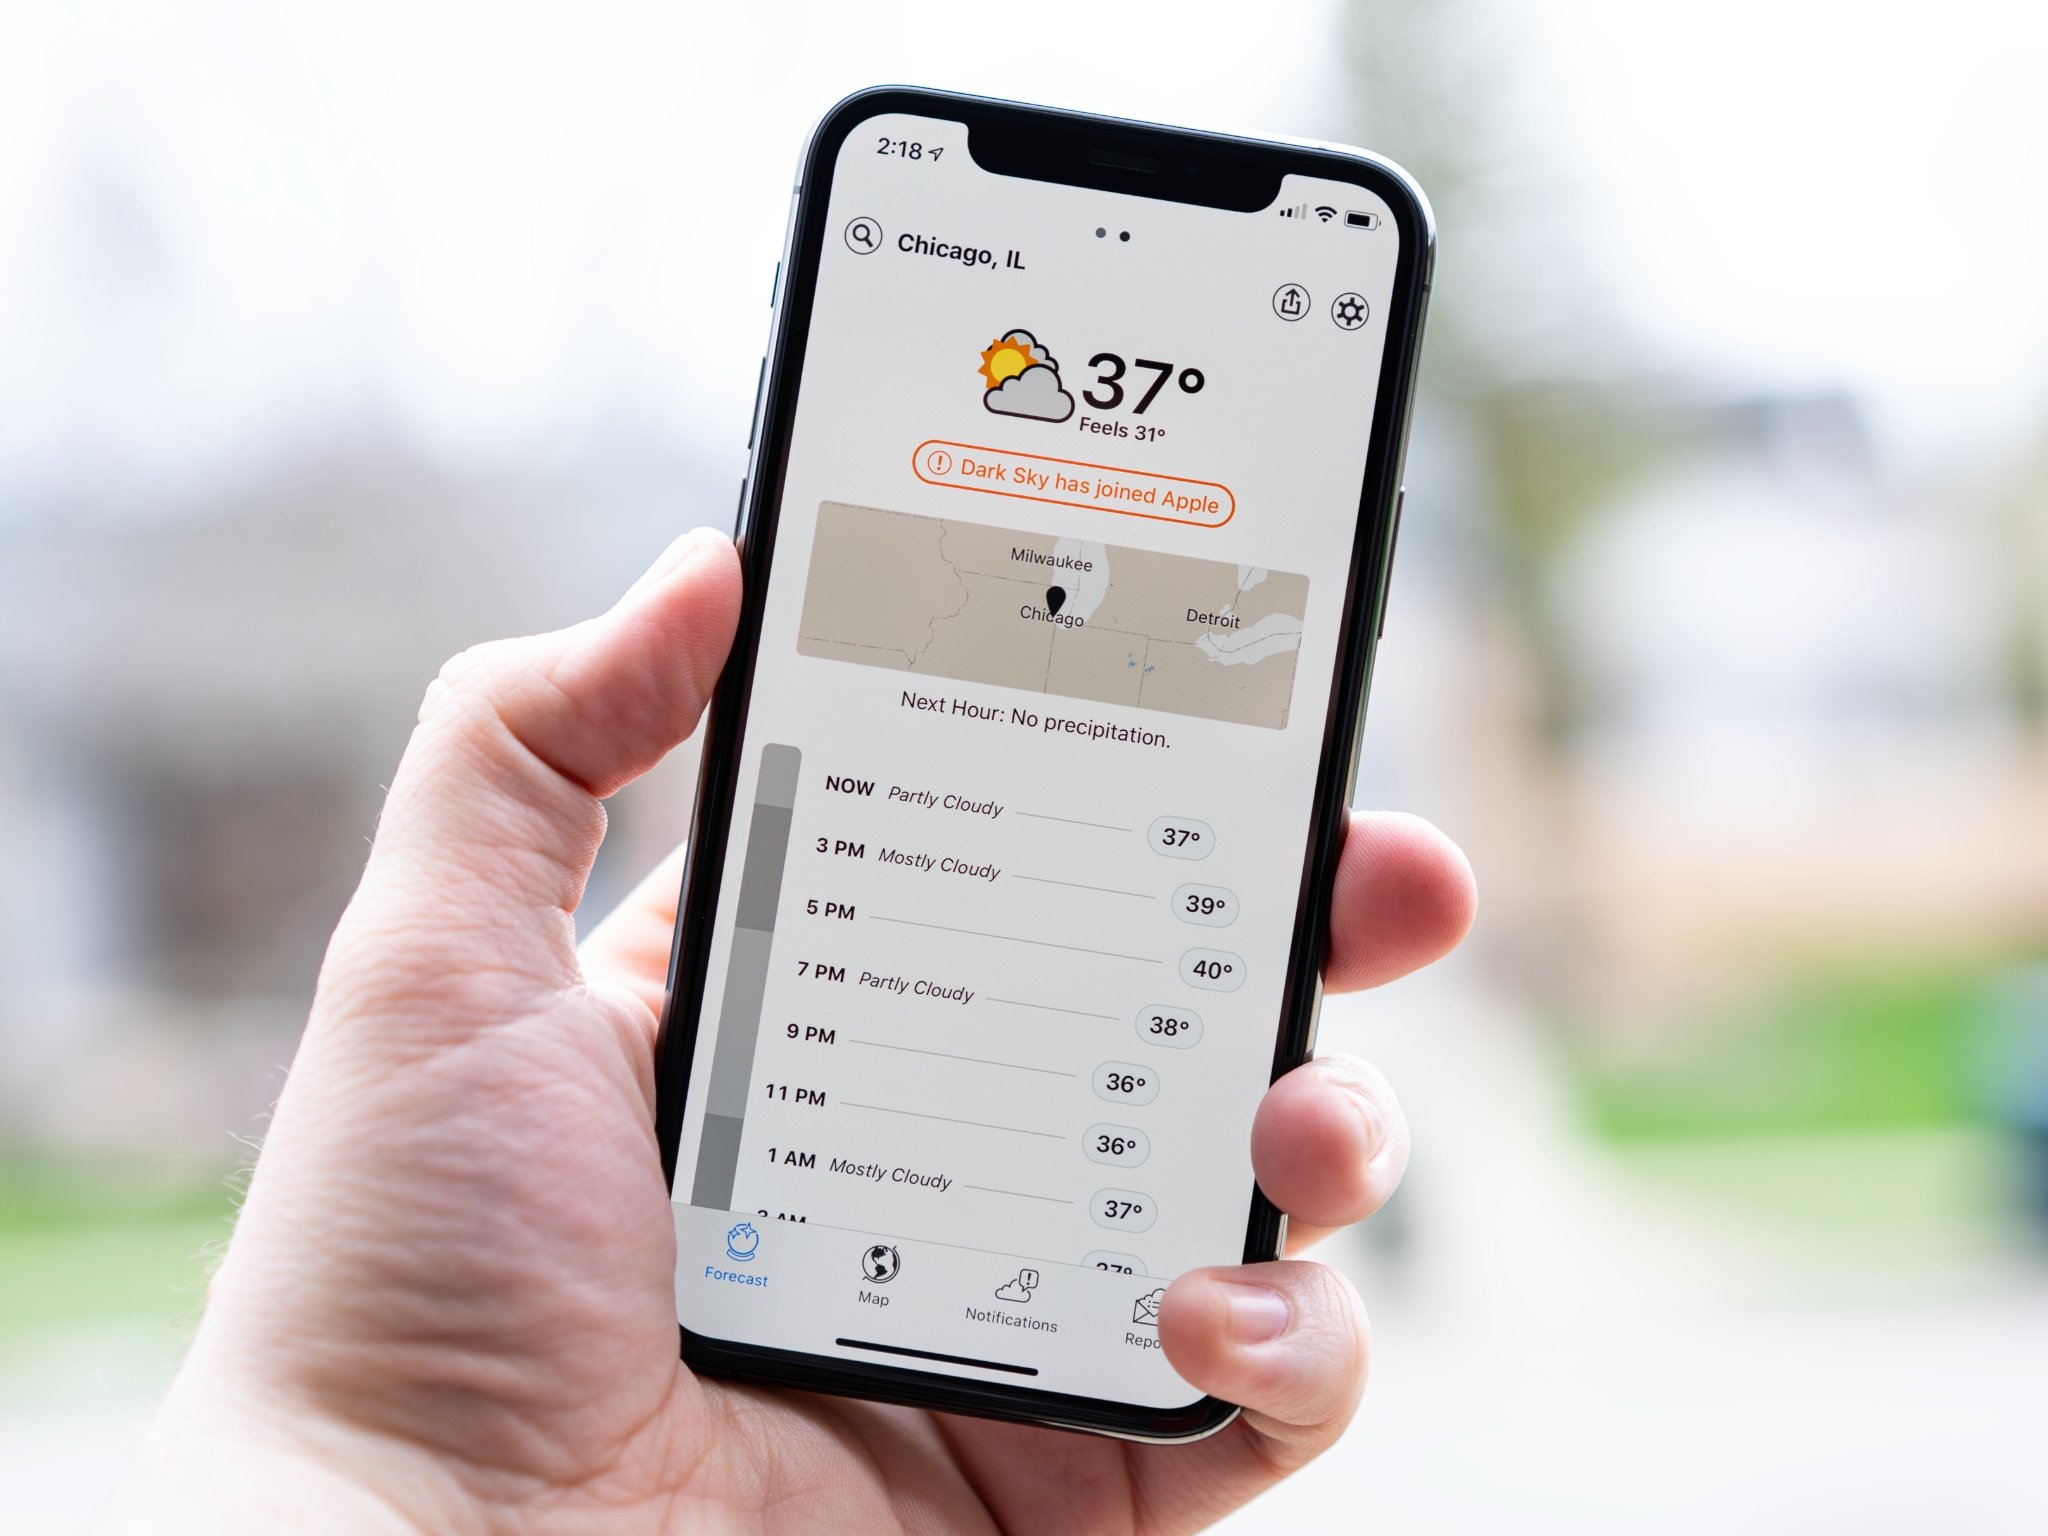 Apple buys popular weather app, Dark Sky — Android app will shut down